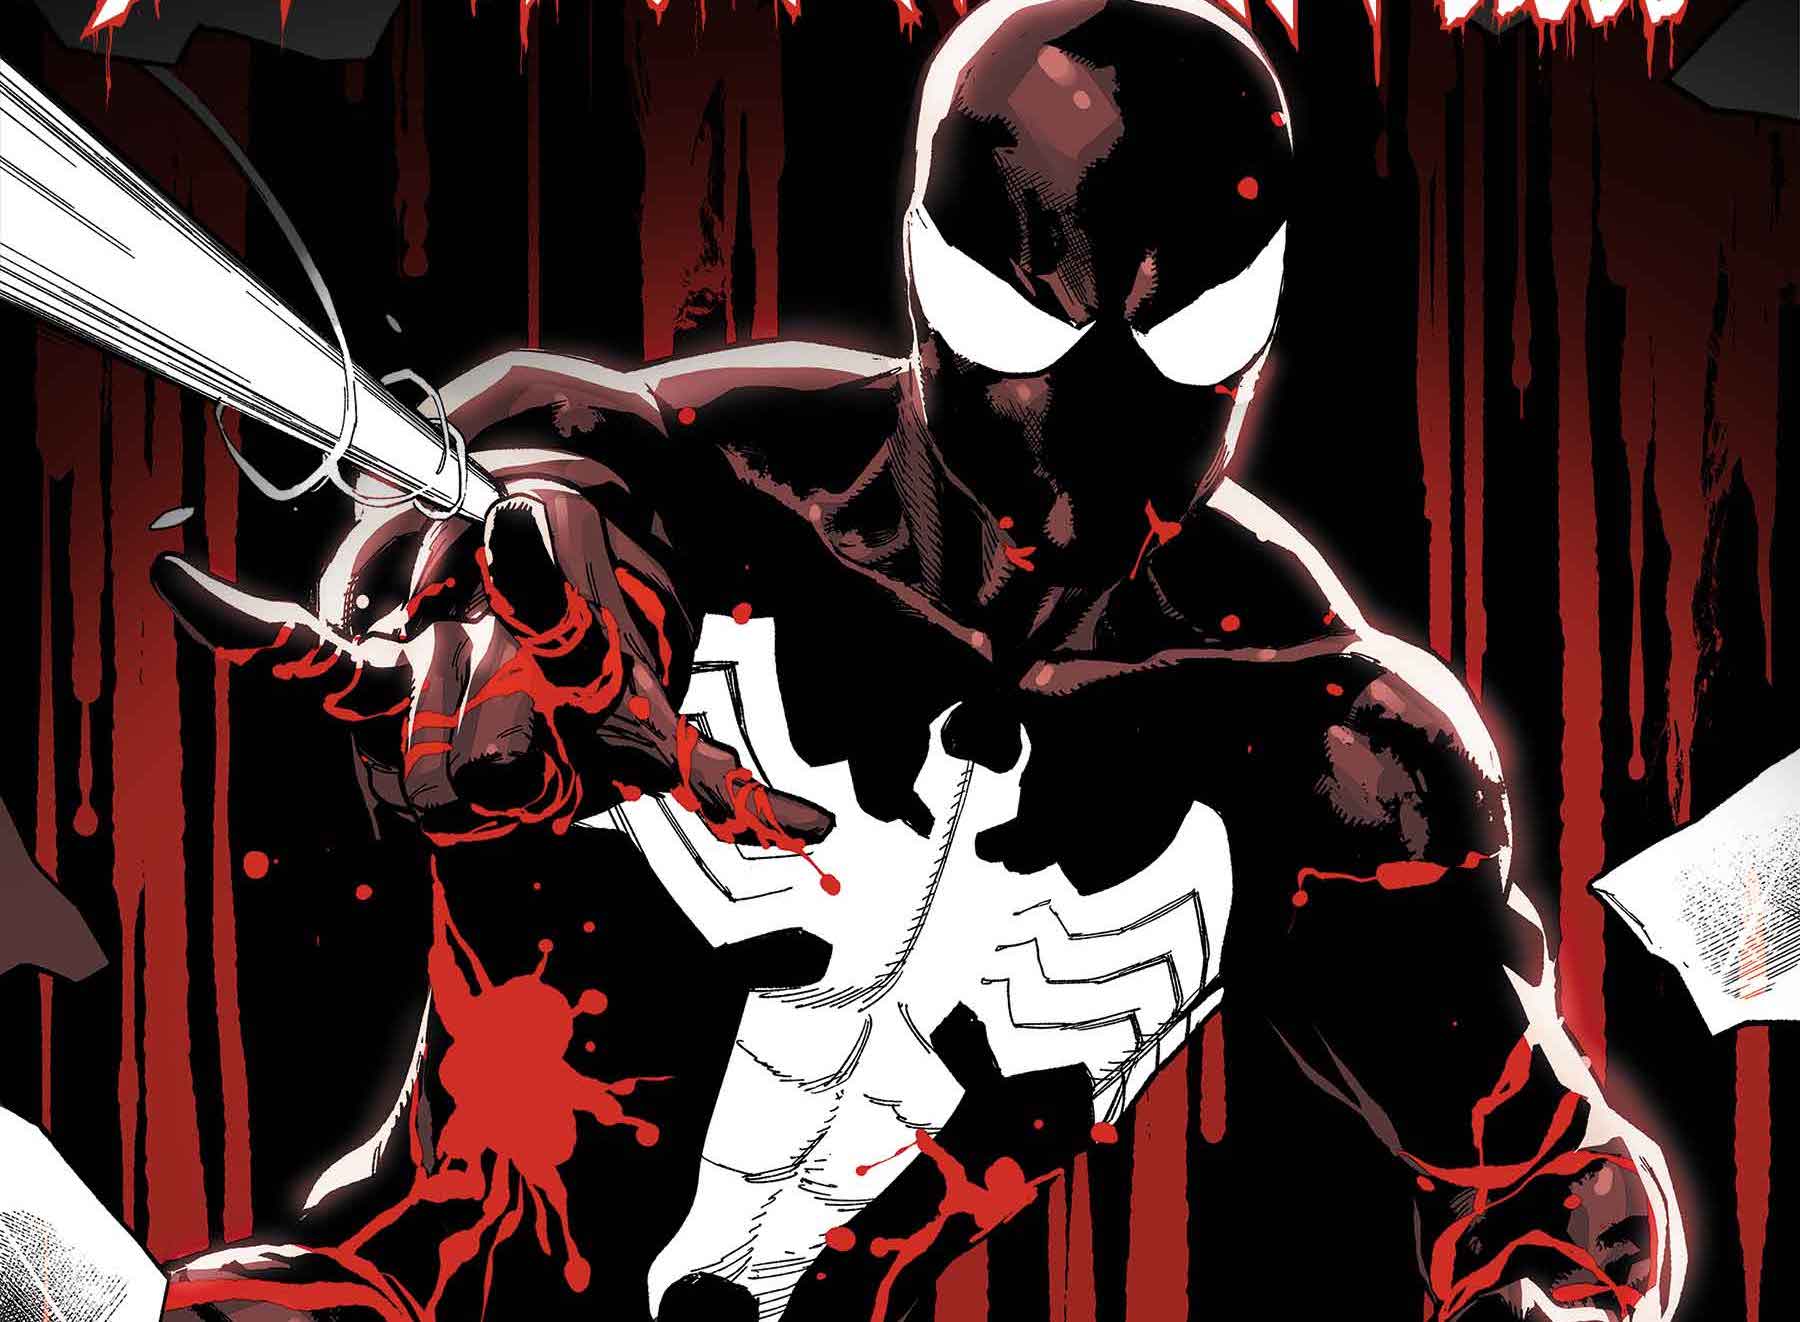 'Spider-Man: Black Suit & Blood' focuses on Spidey's violent streak